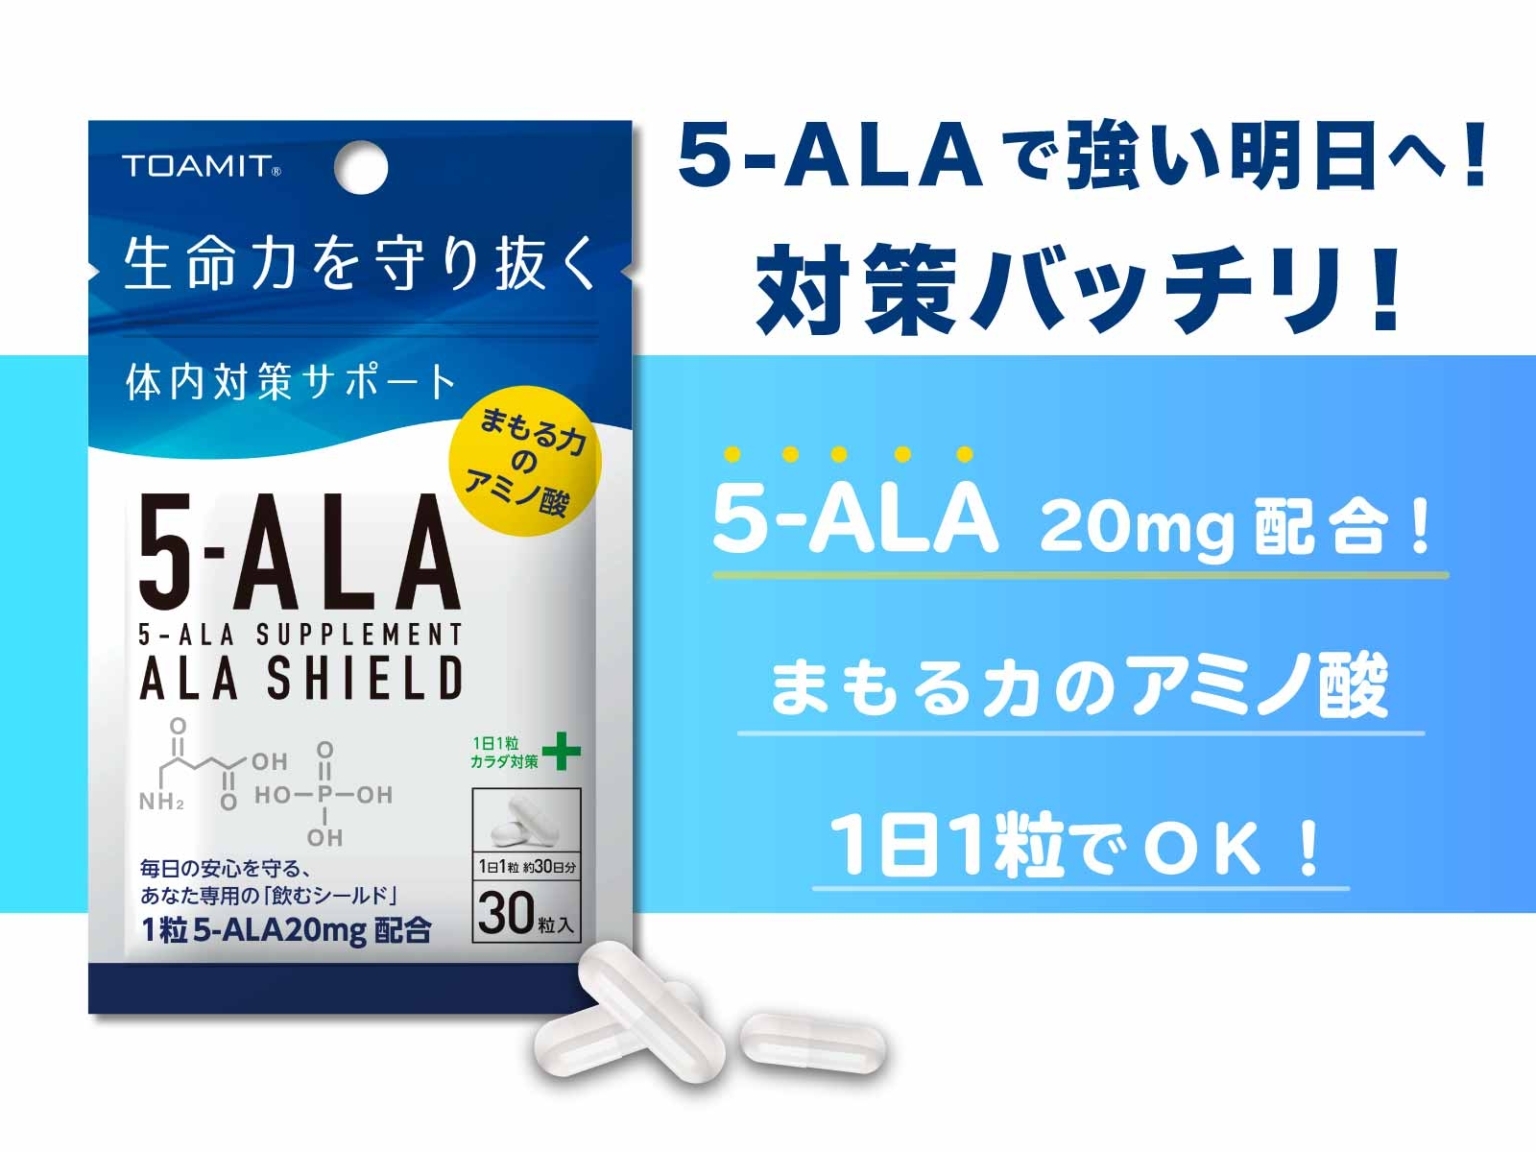 TV情報番組などで話題の商品 超目玉 安心の日本製 ハイクオリティ 日本製 5-ALAサプリメント アラシールド 30粒入 約1か月分 アミノ酸 体内対策サポート 飲むシールド IN 毎日の健康に JAPAN MADE クエン酸 5-アミノレブリン酸